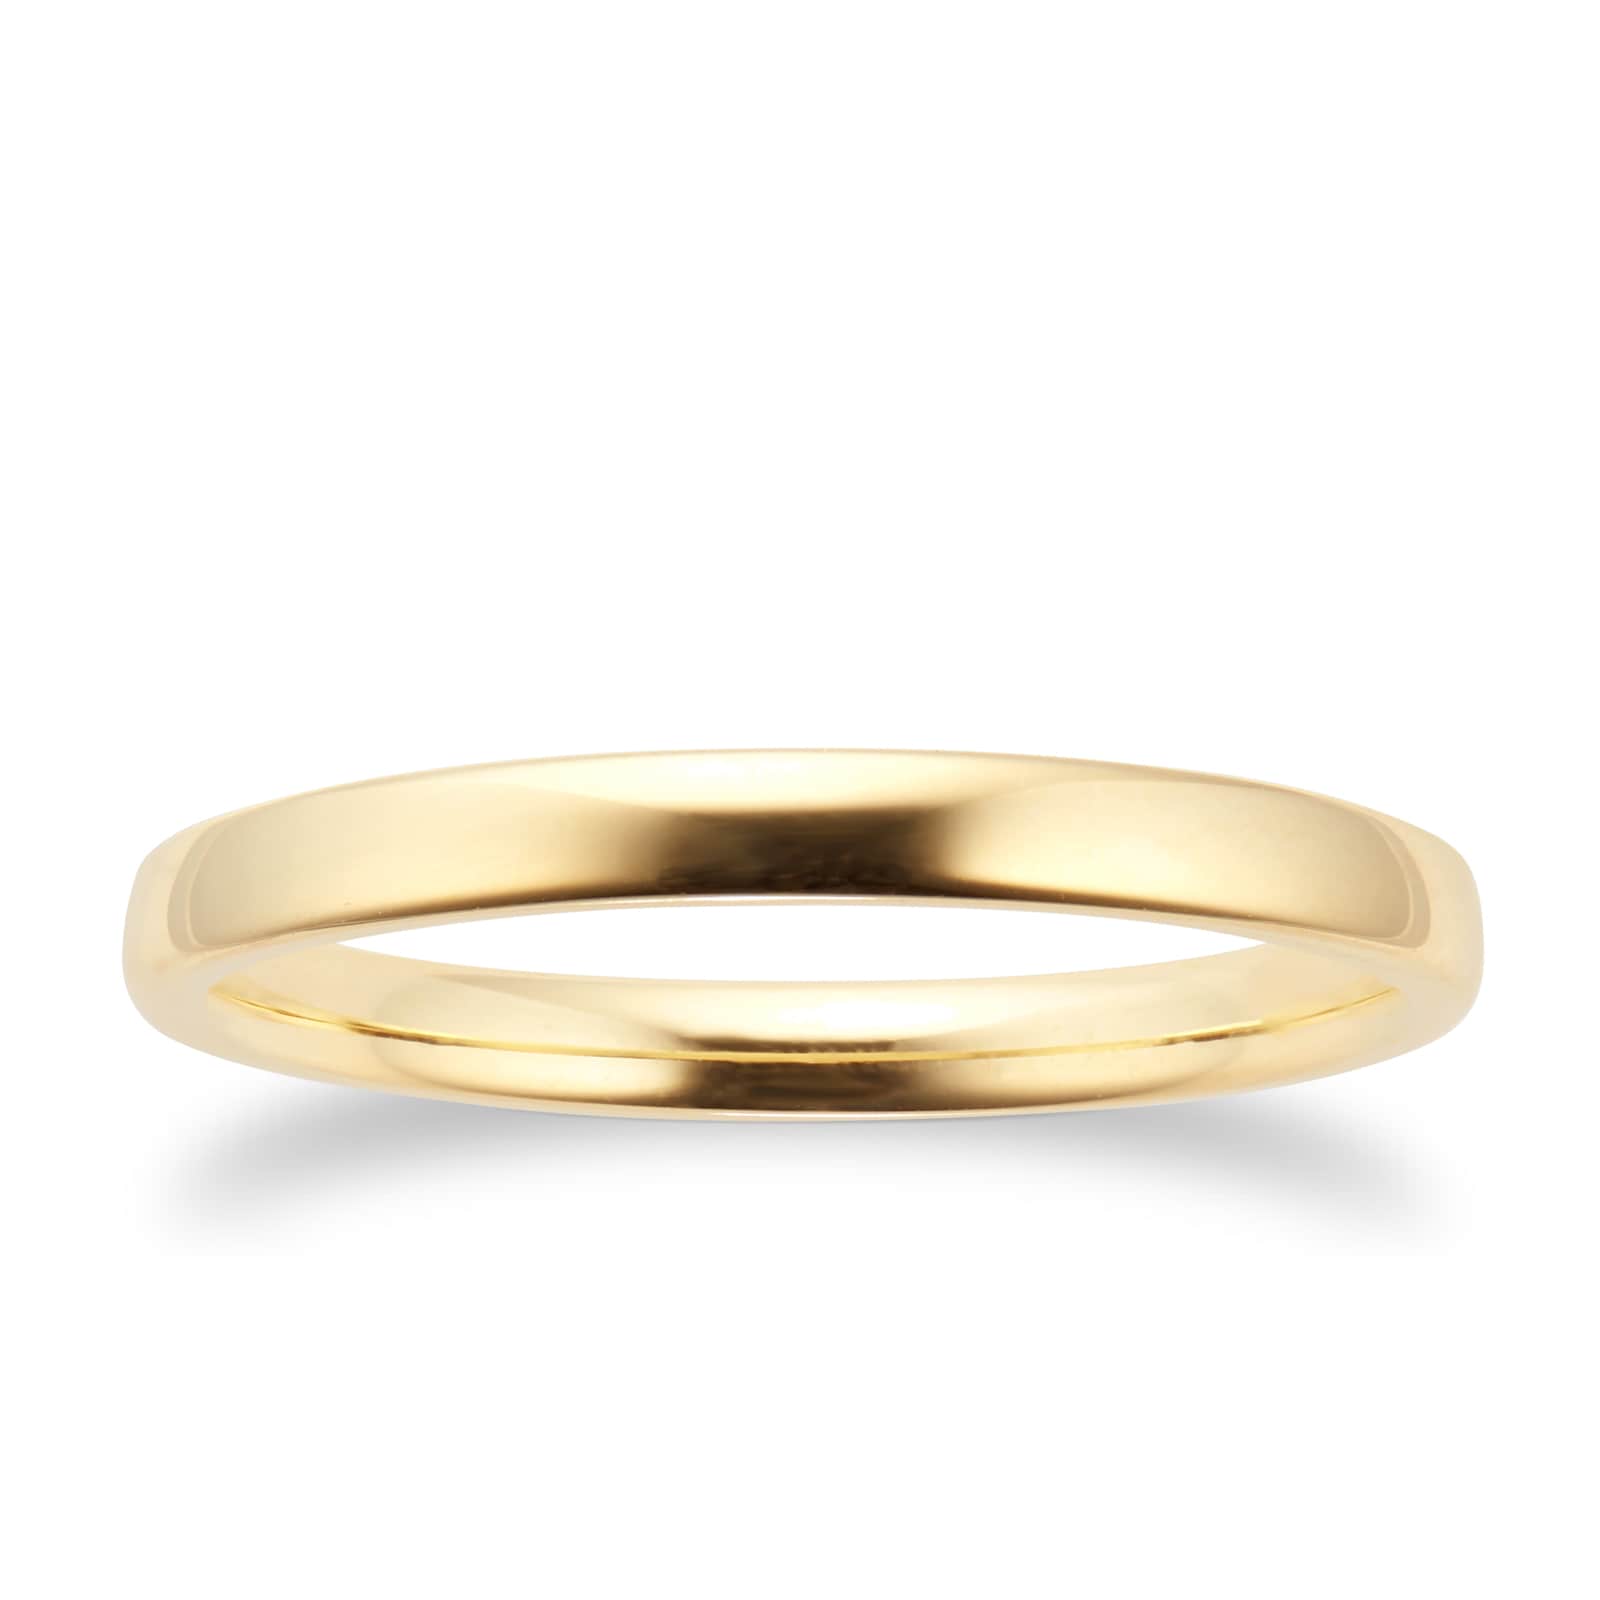 2mm Slight Court Standard Wedding Ring In 18 Carat Yellow Gold Ring Size Q